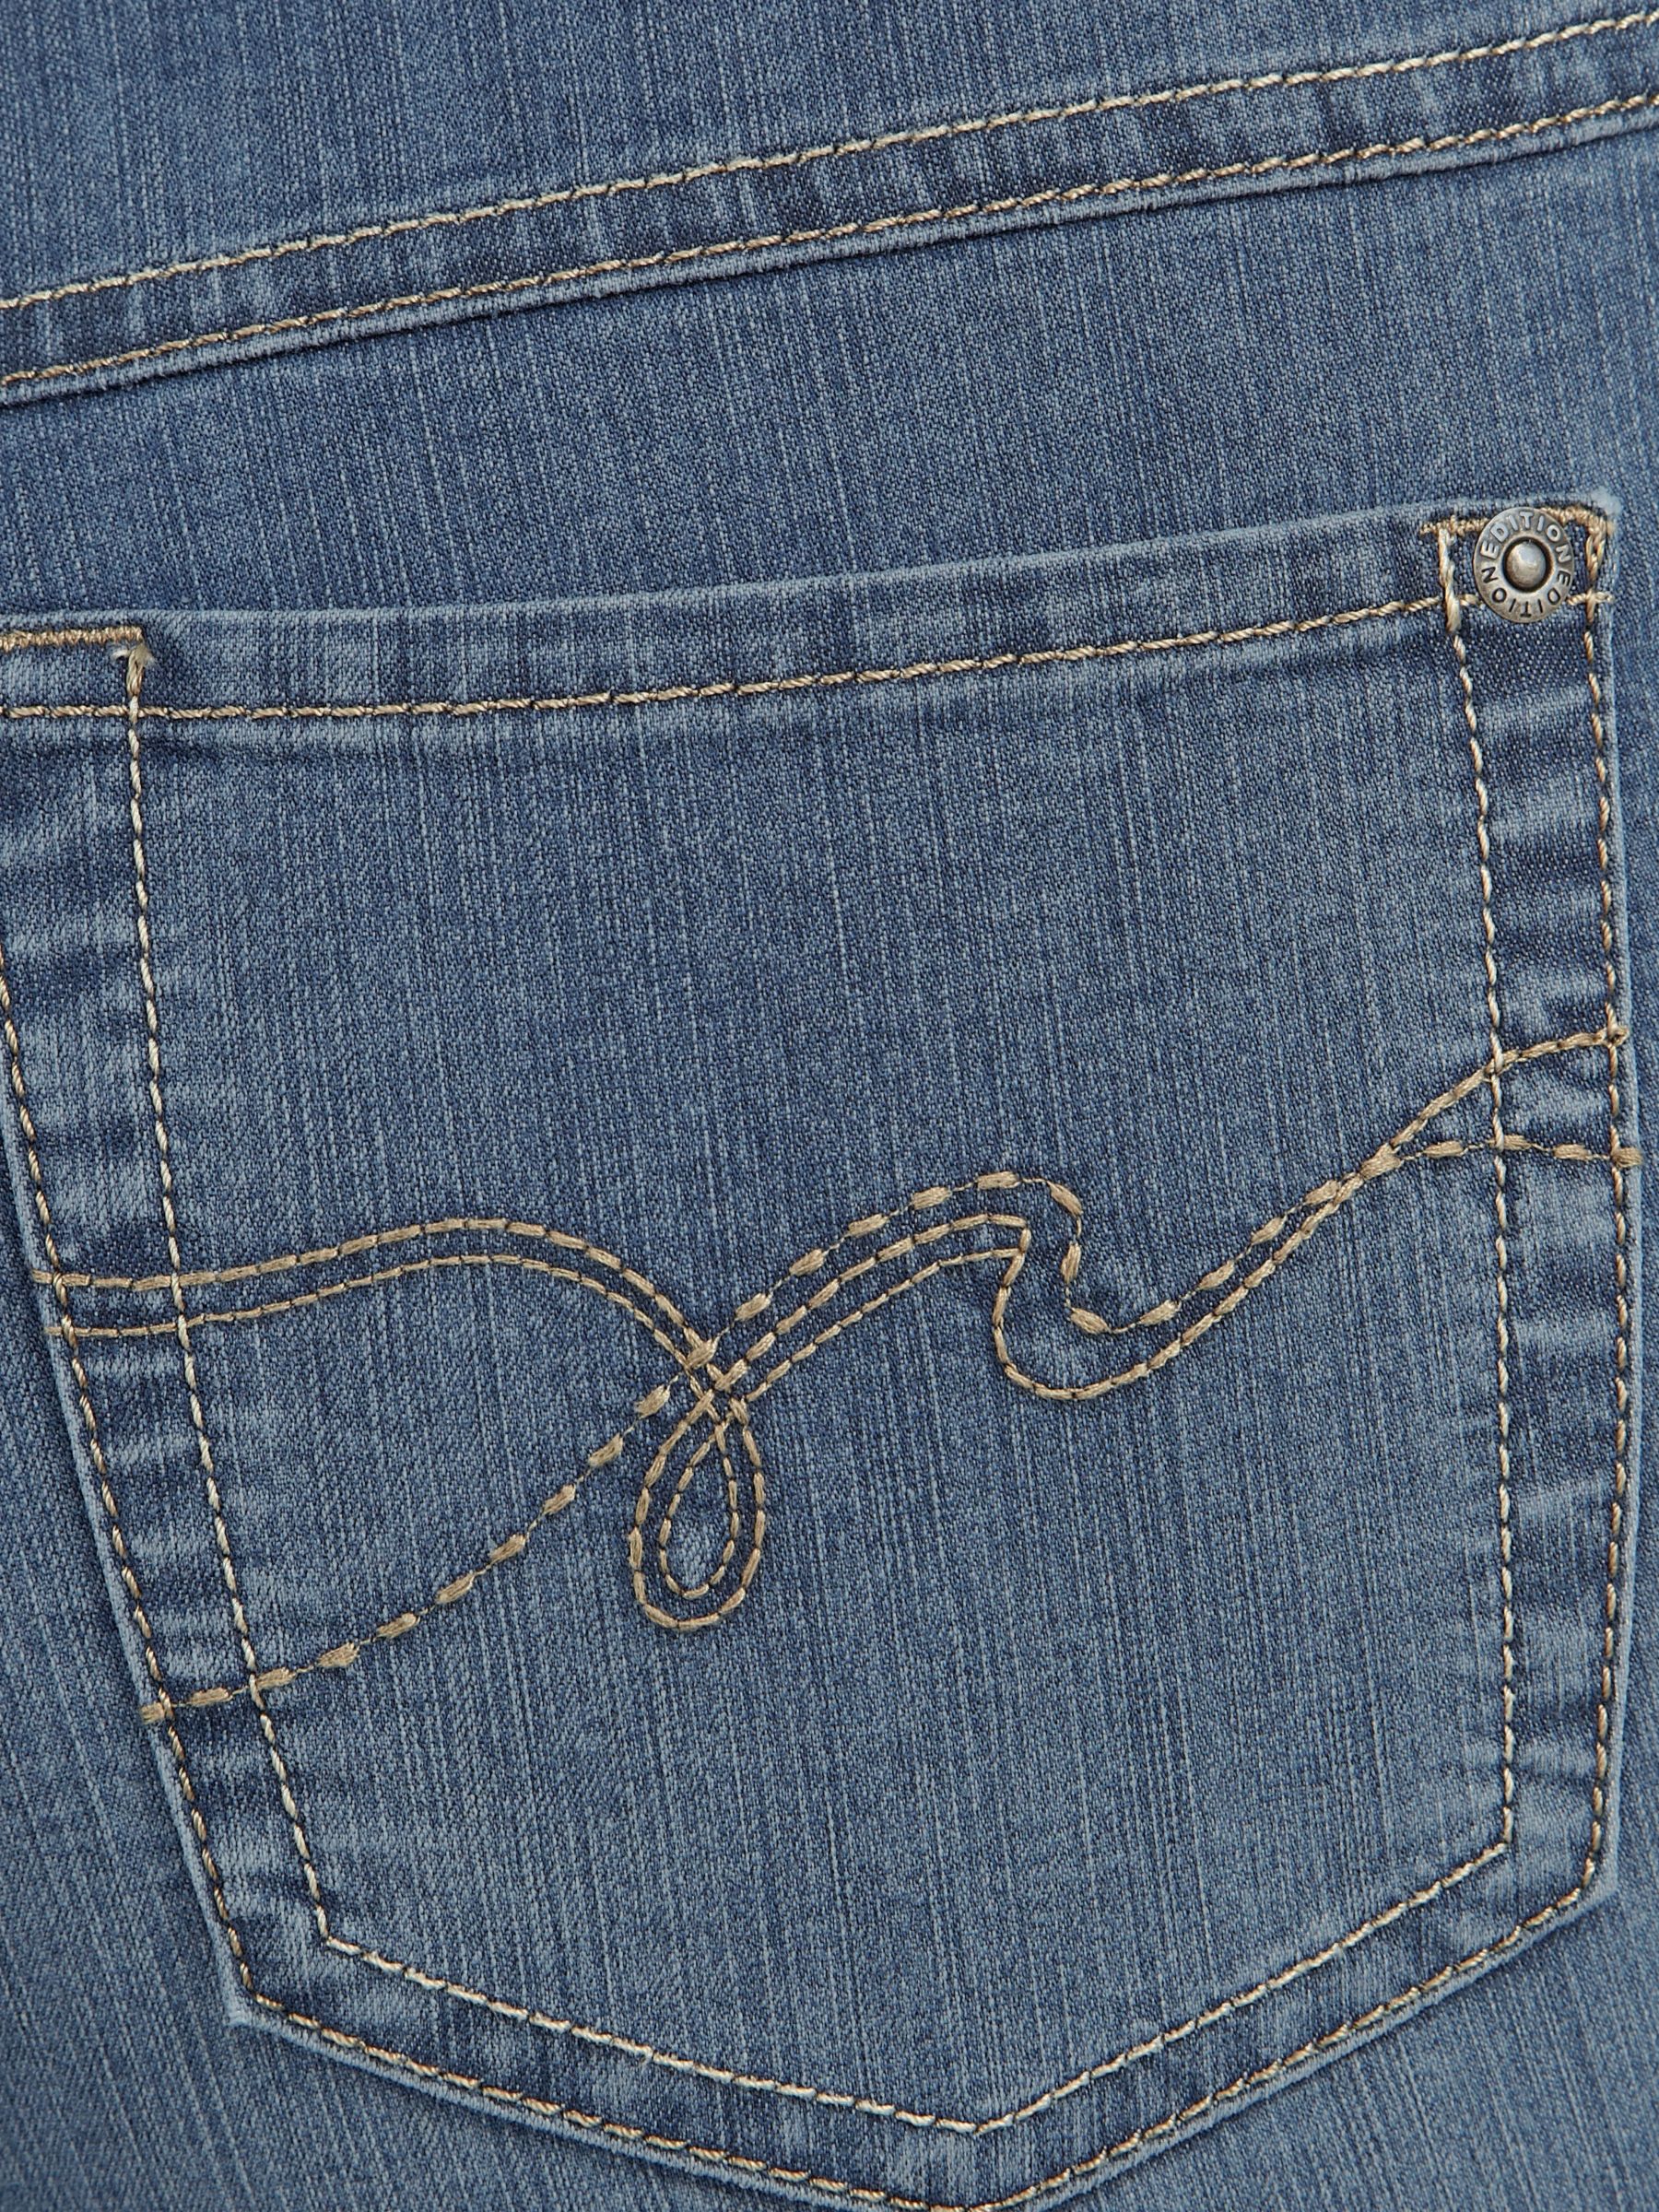 gerry weber jeans sale